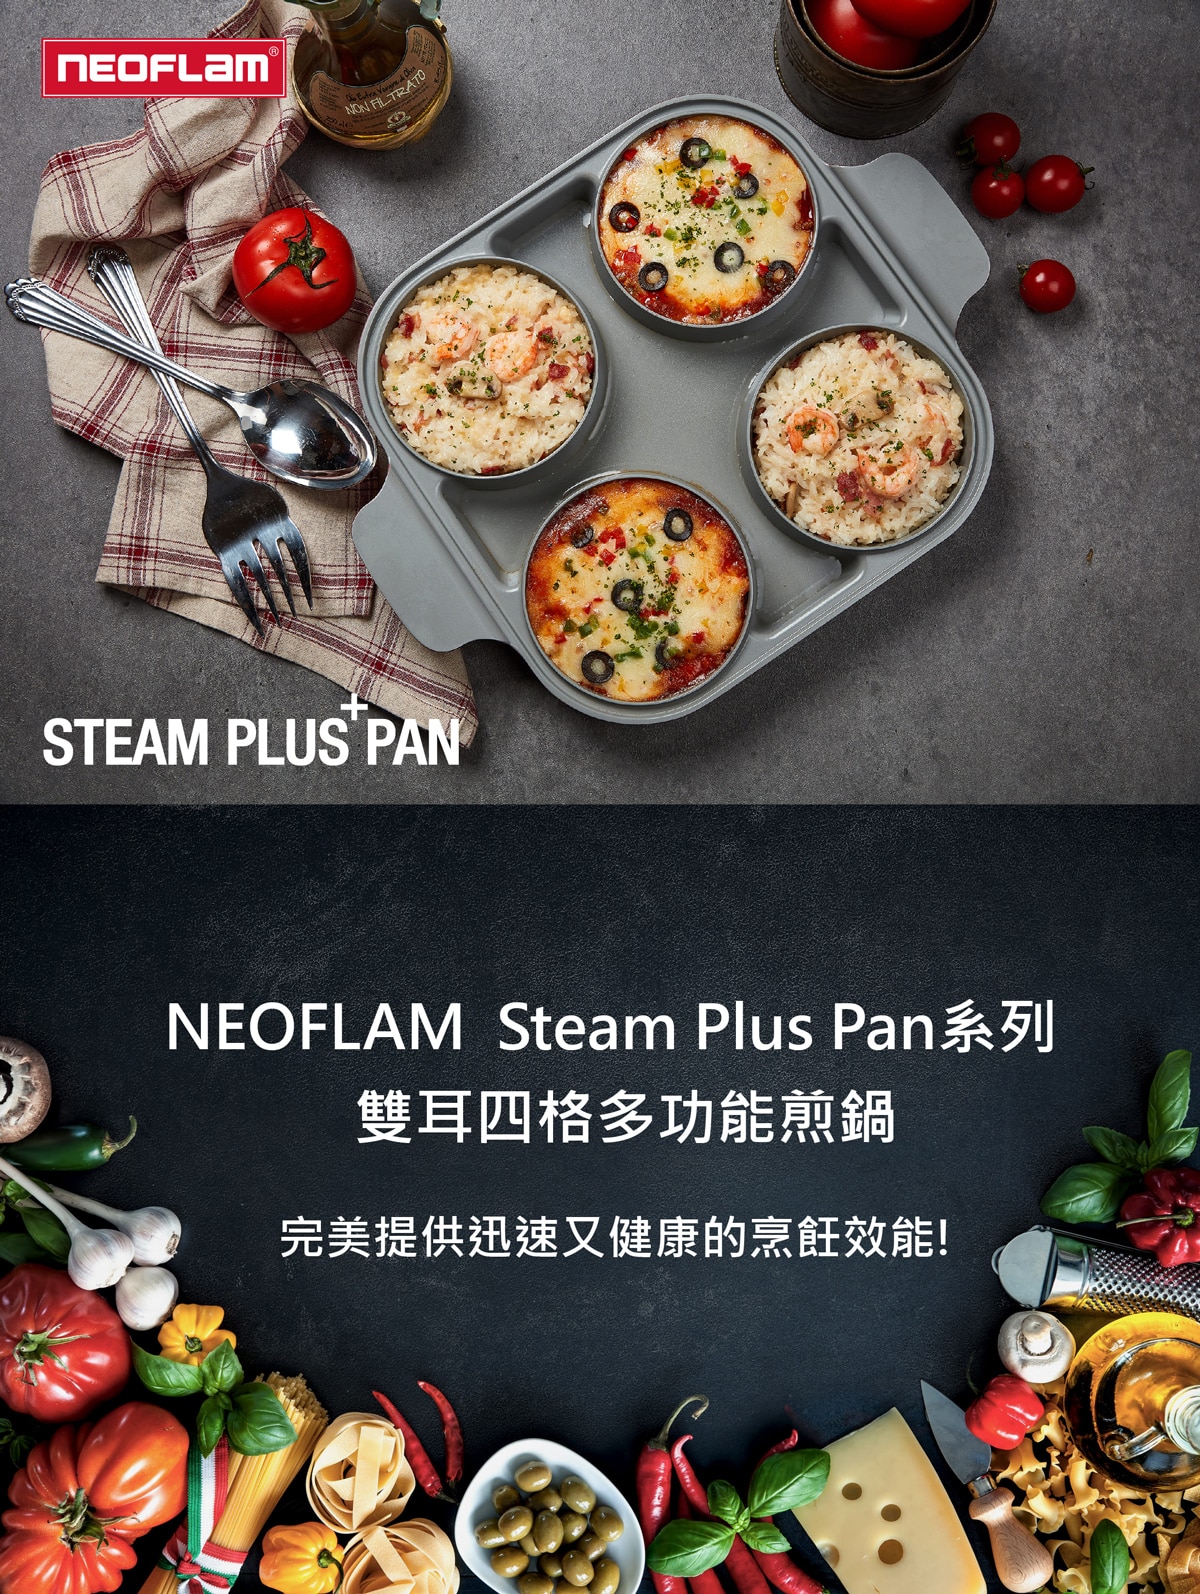 NEOFLAM Steam Plus Pan系列烹飪神器，完美提供迅速又健康的烹飪效能。